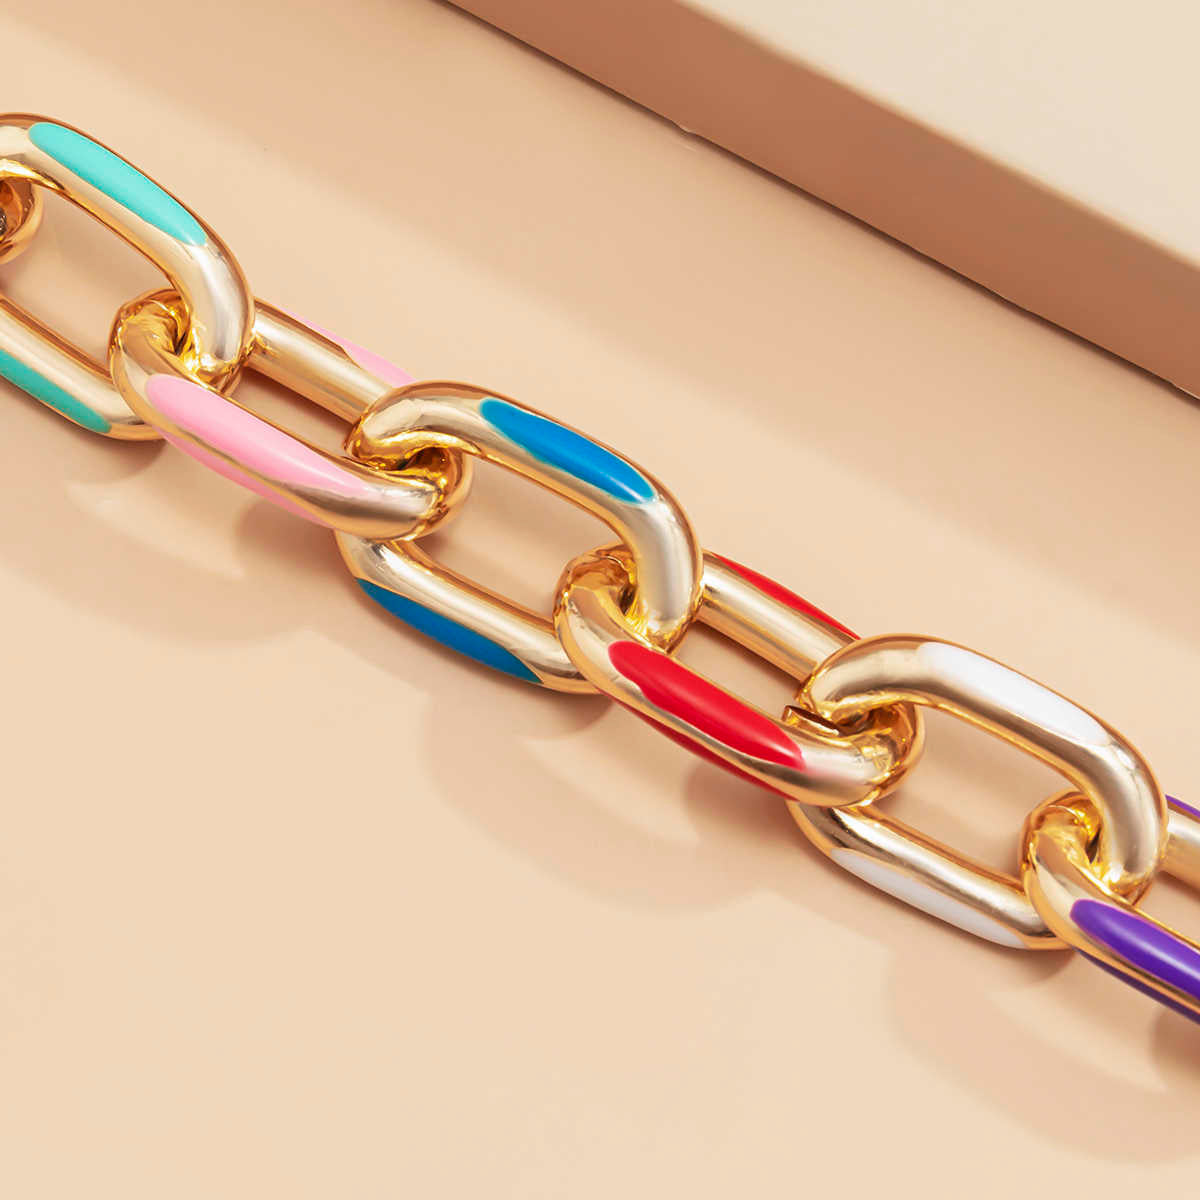 Bohemian Colorful Painted Gold Chain Bracelet